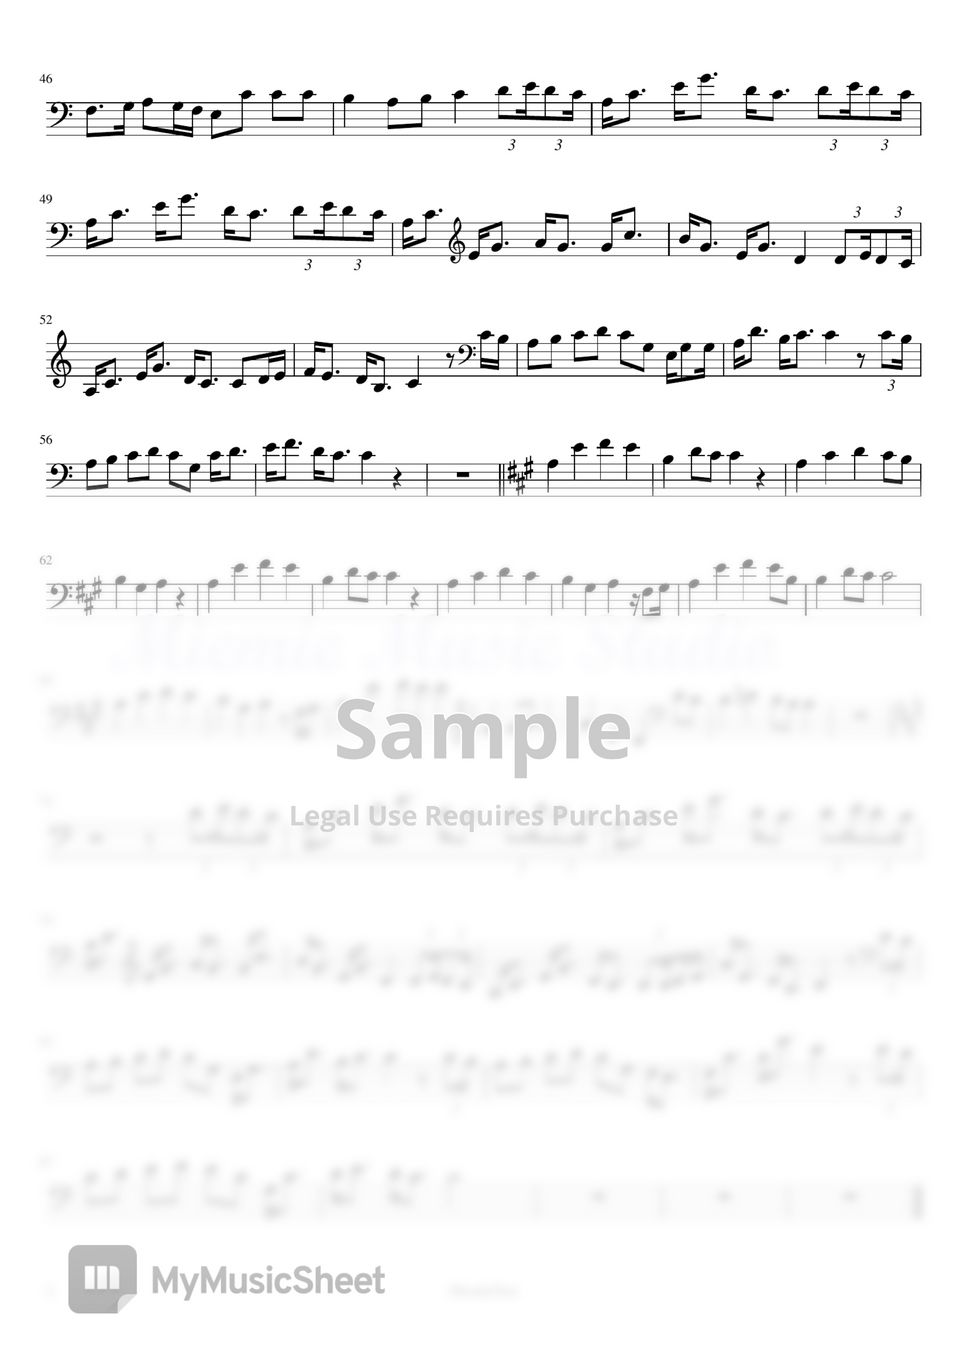 米津玄師 - Lemon (Cello Sheets/大提琴譜) (大提琴) by Miemie Music Studio